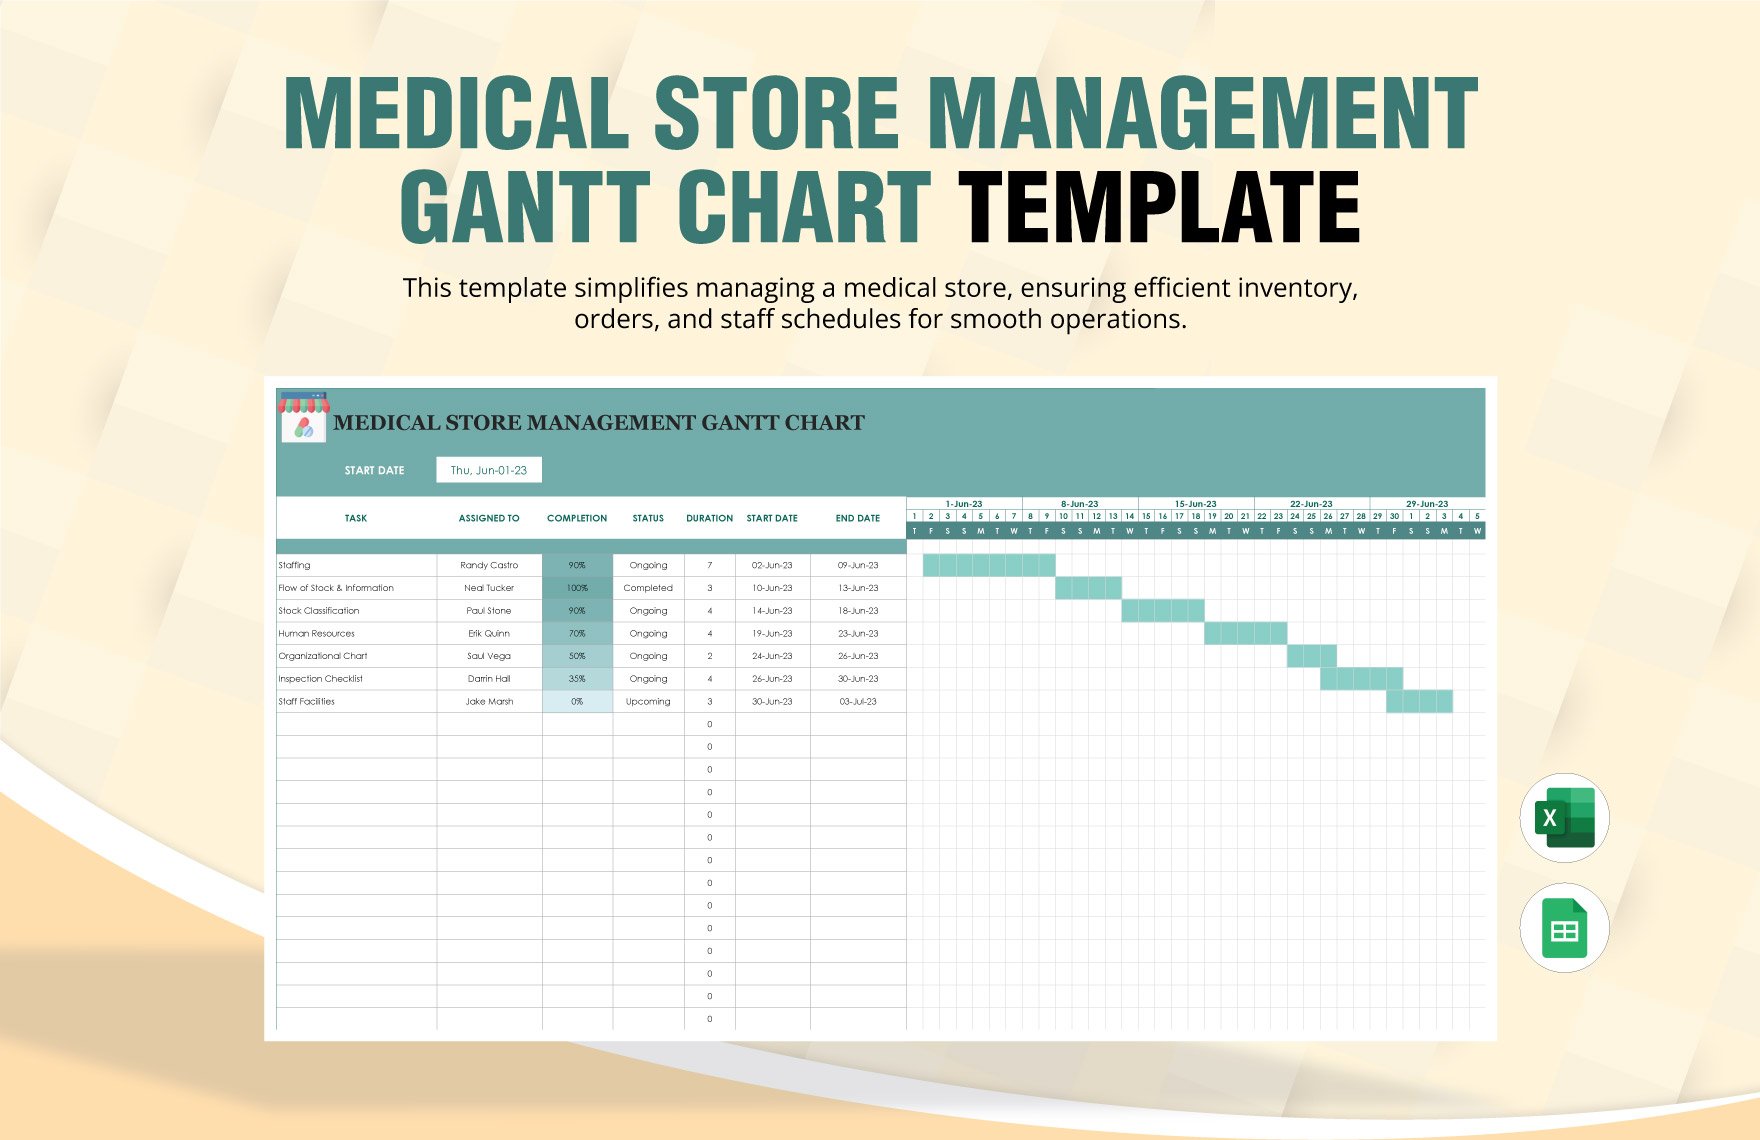 Medical Store Management Gantt Chart Template in Excel, Google Sheets